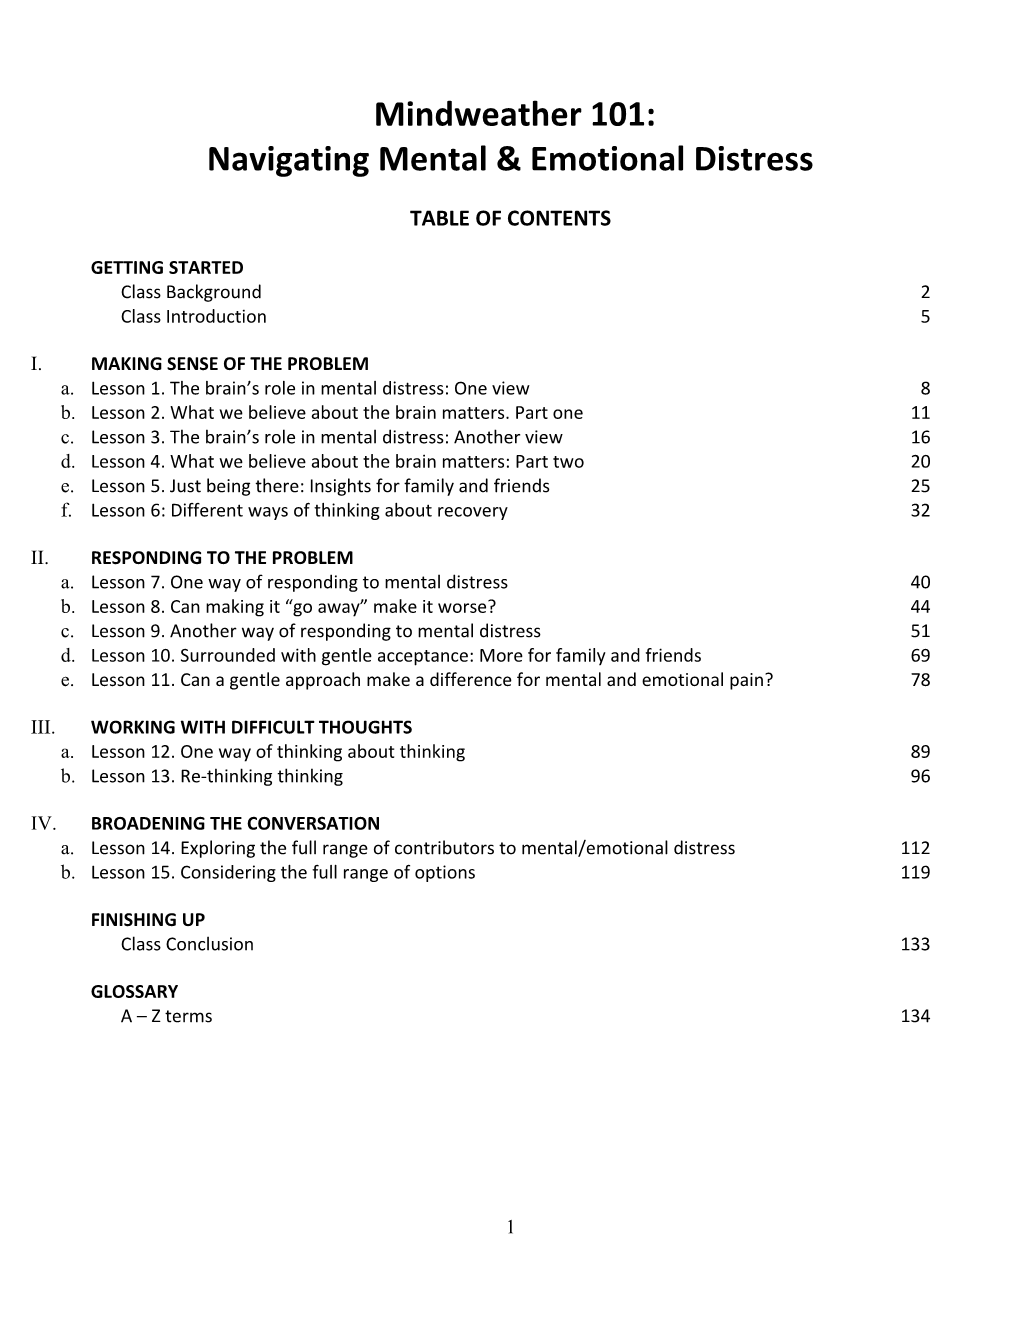 Navigating Mental & Emotional Distress